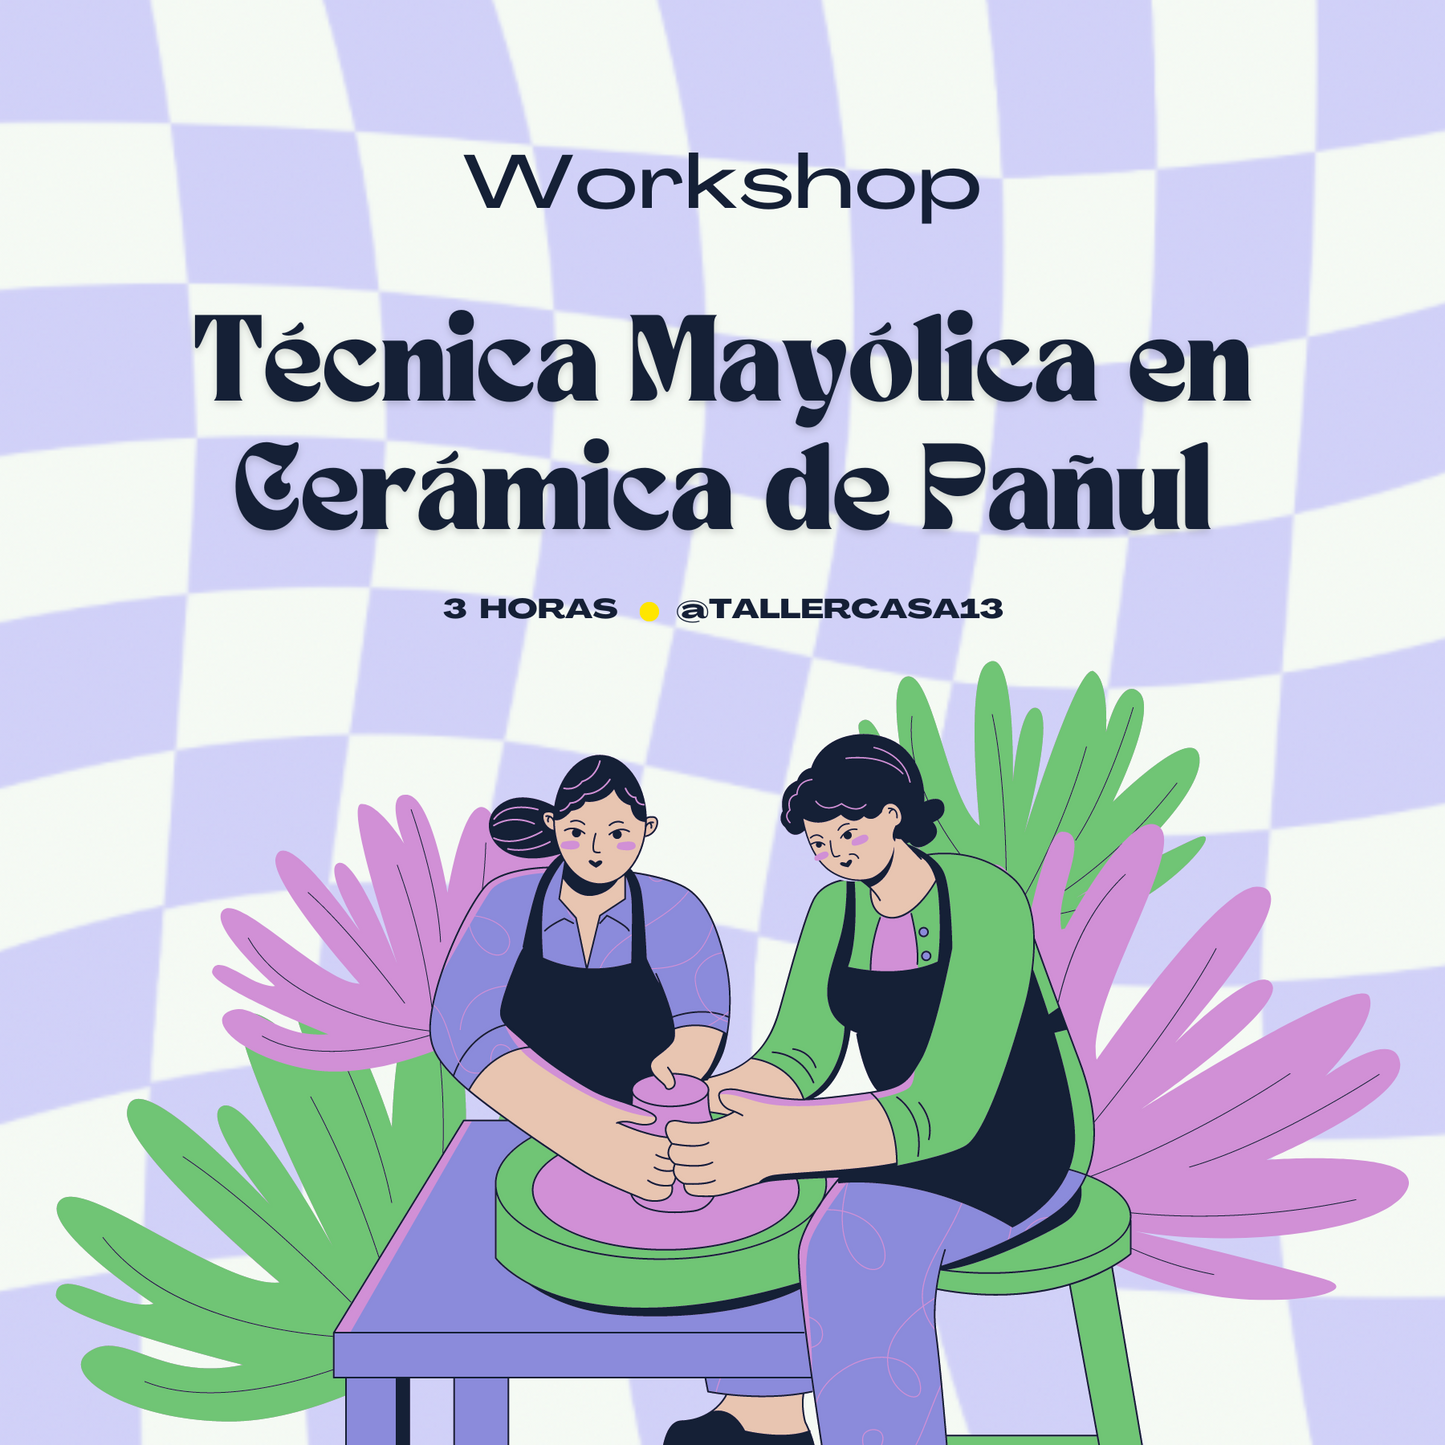 Workshop Técnica Mayólica en Cerámica de Pañul